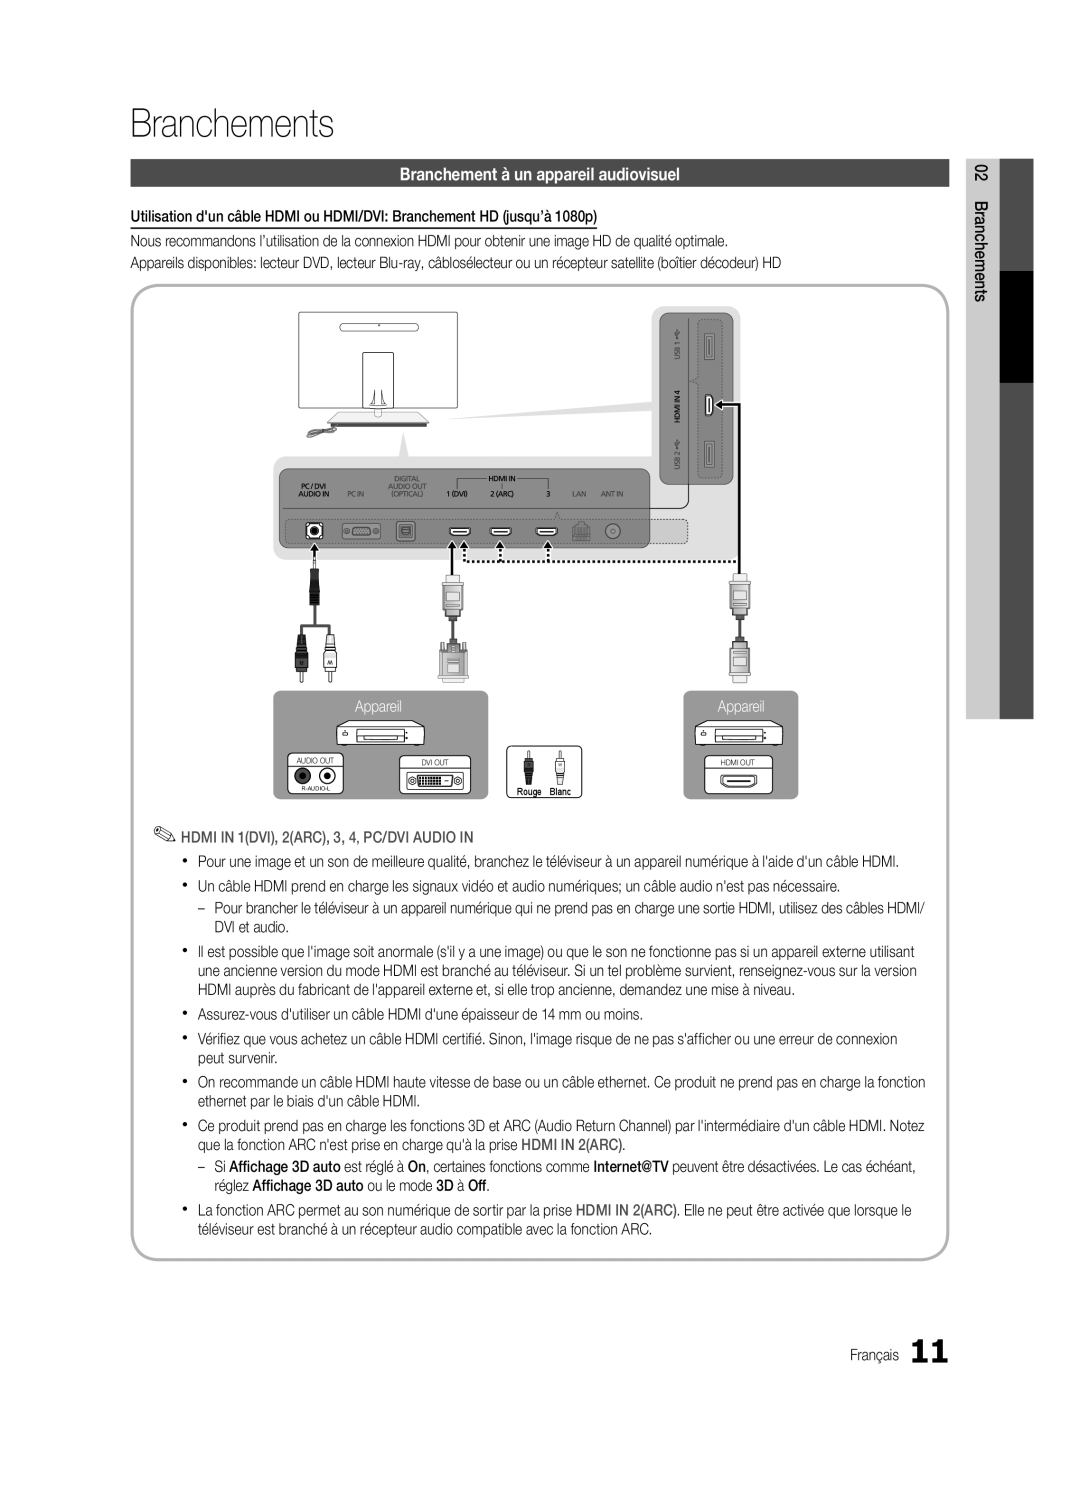 Samsung Series C9 Branchements, Branchement à un appareil audiovisuel, Appareil, HDMI IN 1DVI, 2ARC, 3, 4, PC/DVI AUDIO IN 